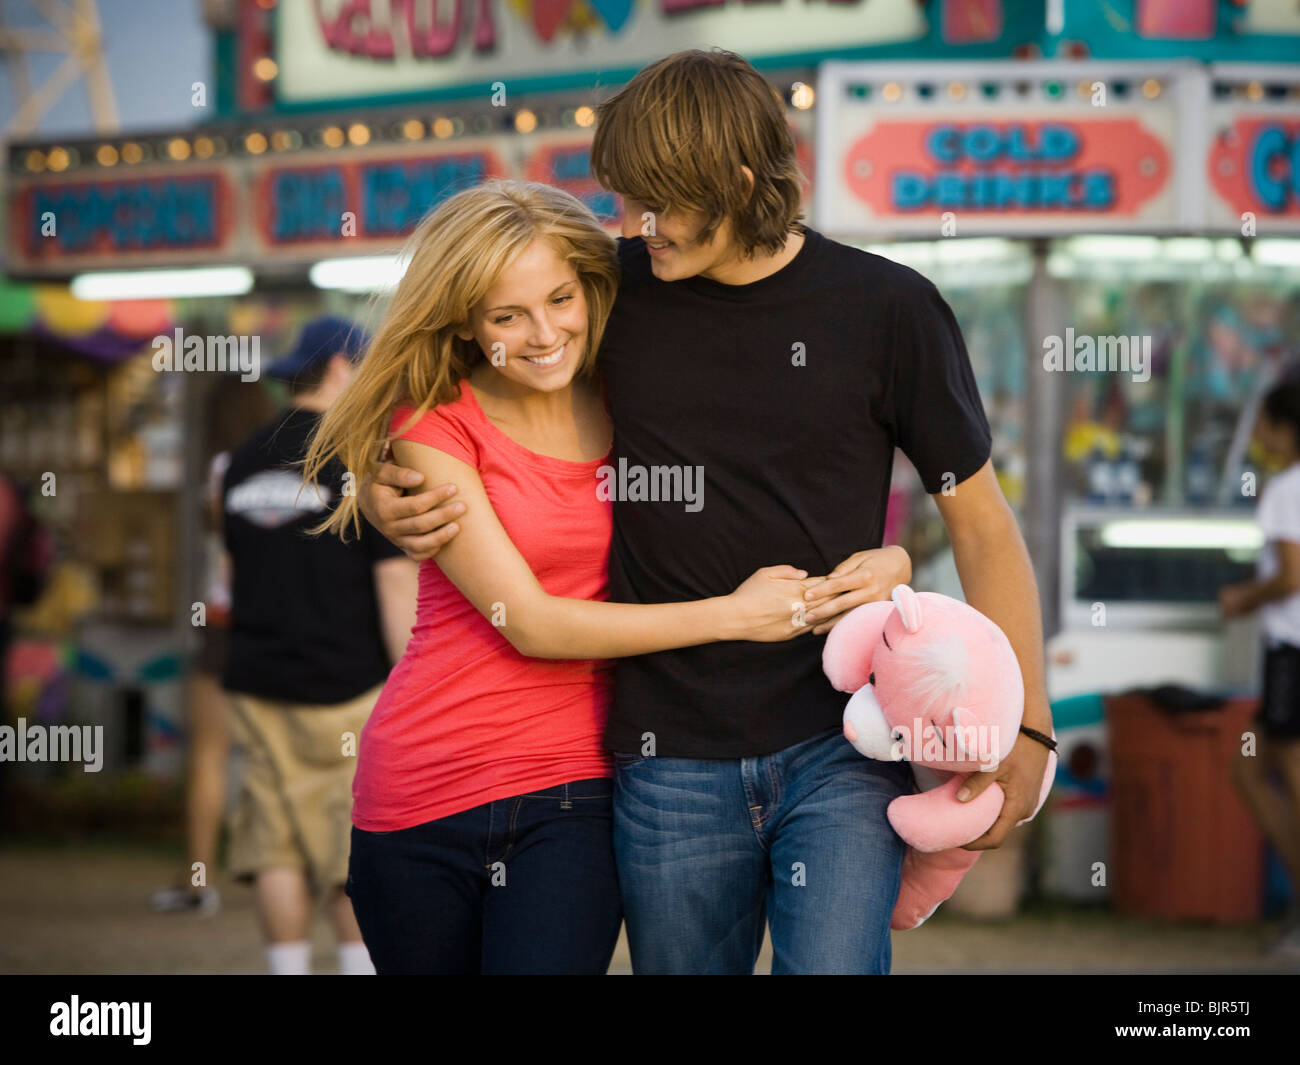 young couple at an amusement park Stock Photo